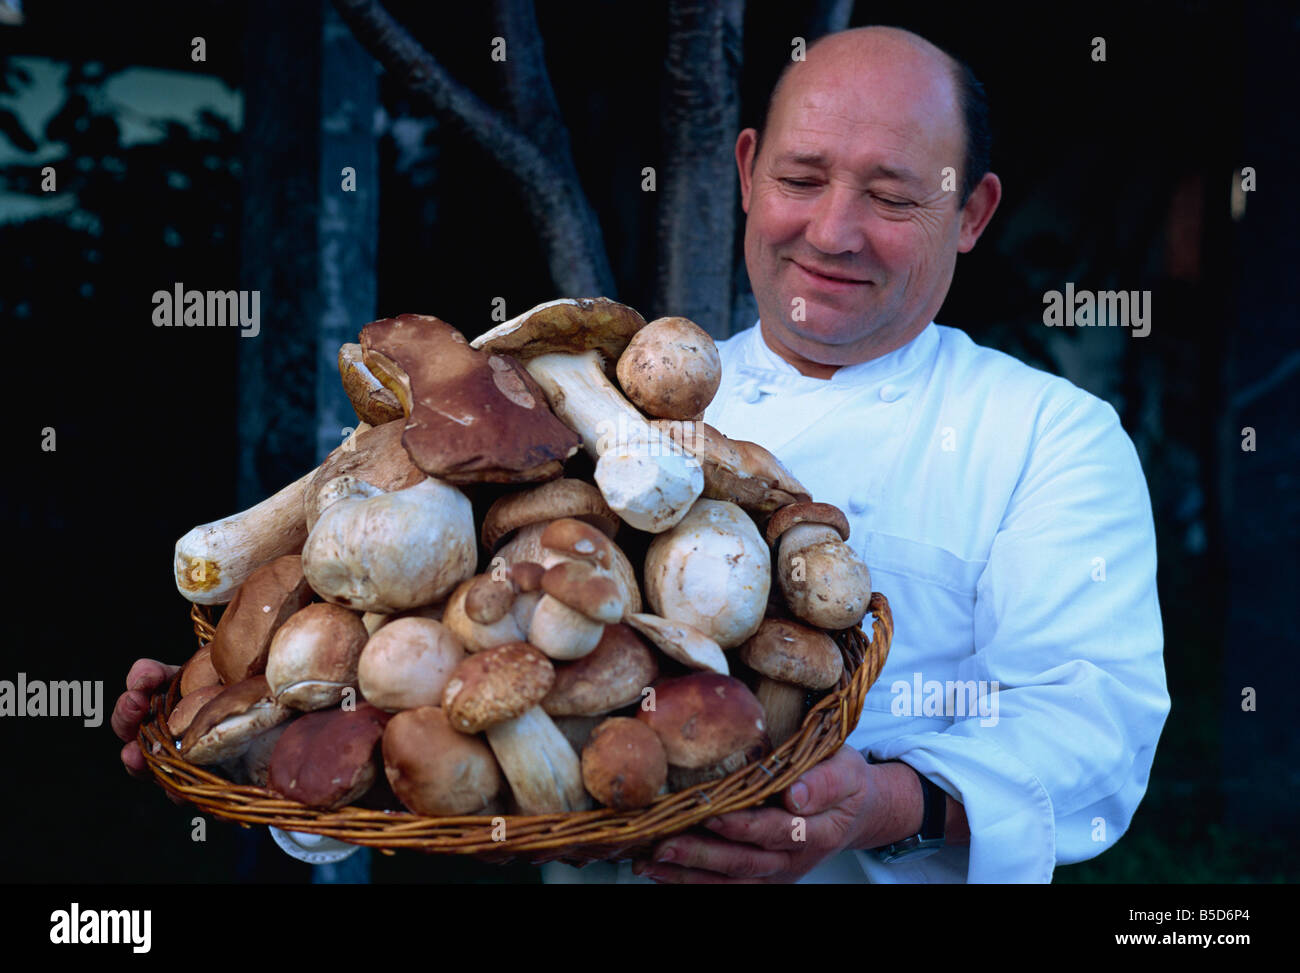 Chef with basket of mushrooms, Lugano, Ticino region, Switzerland, Europe Stock Photo